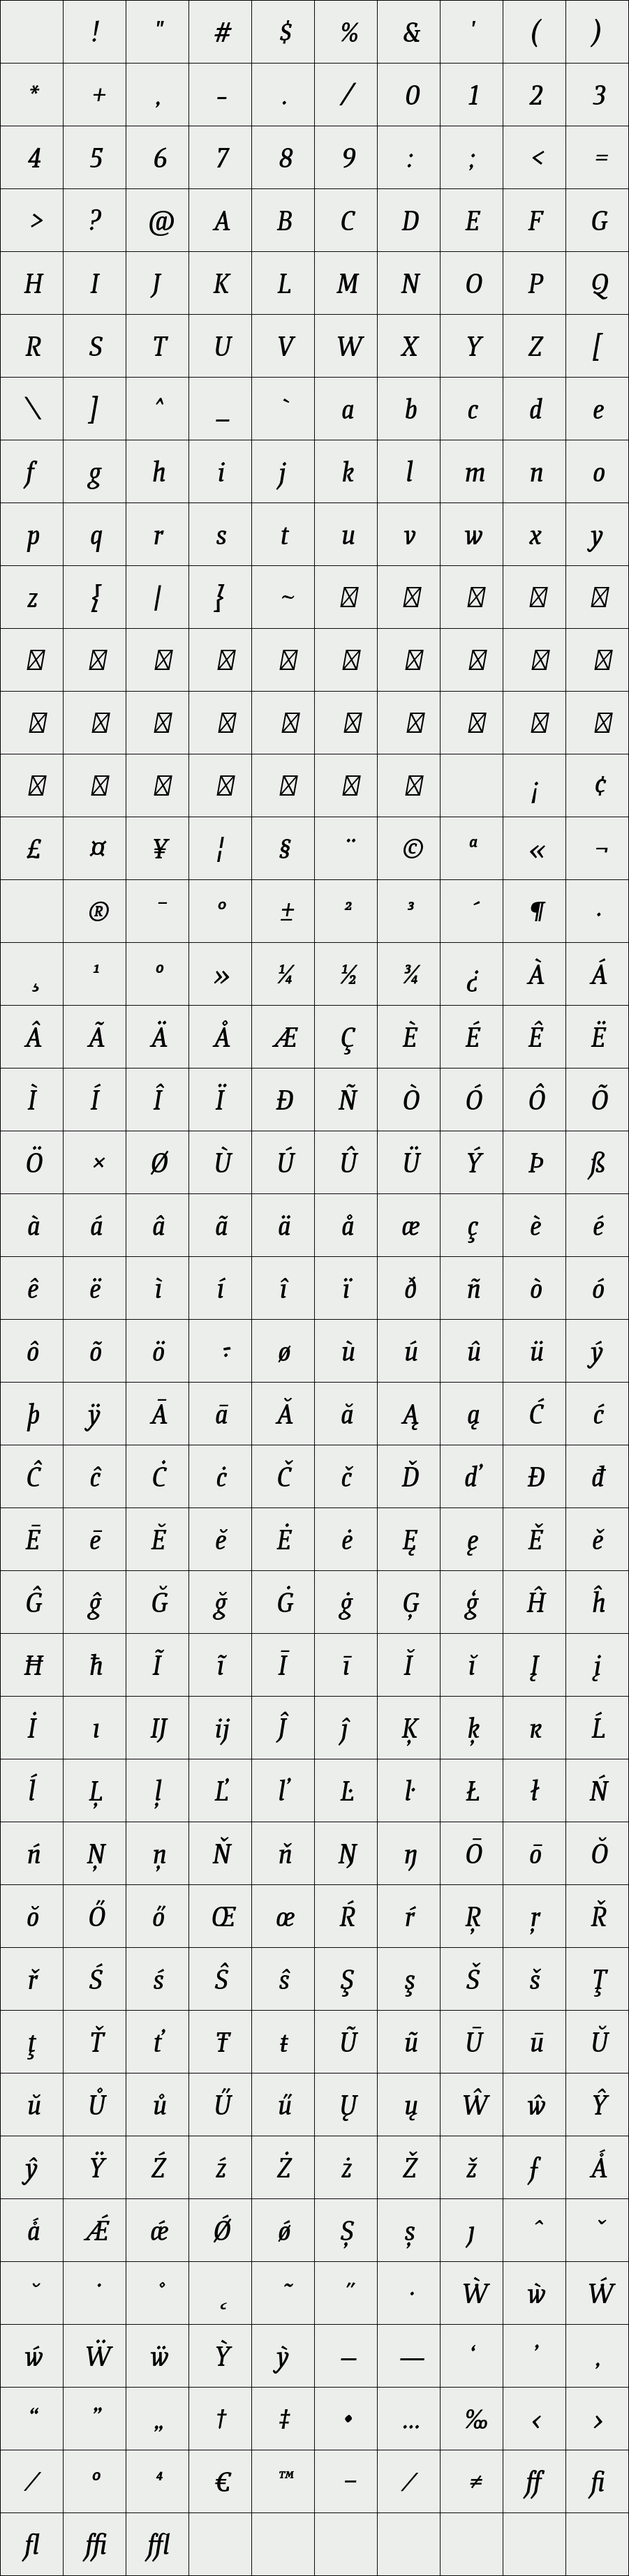 Quiroga Serif DemiBold Italic